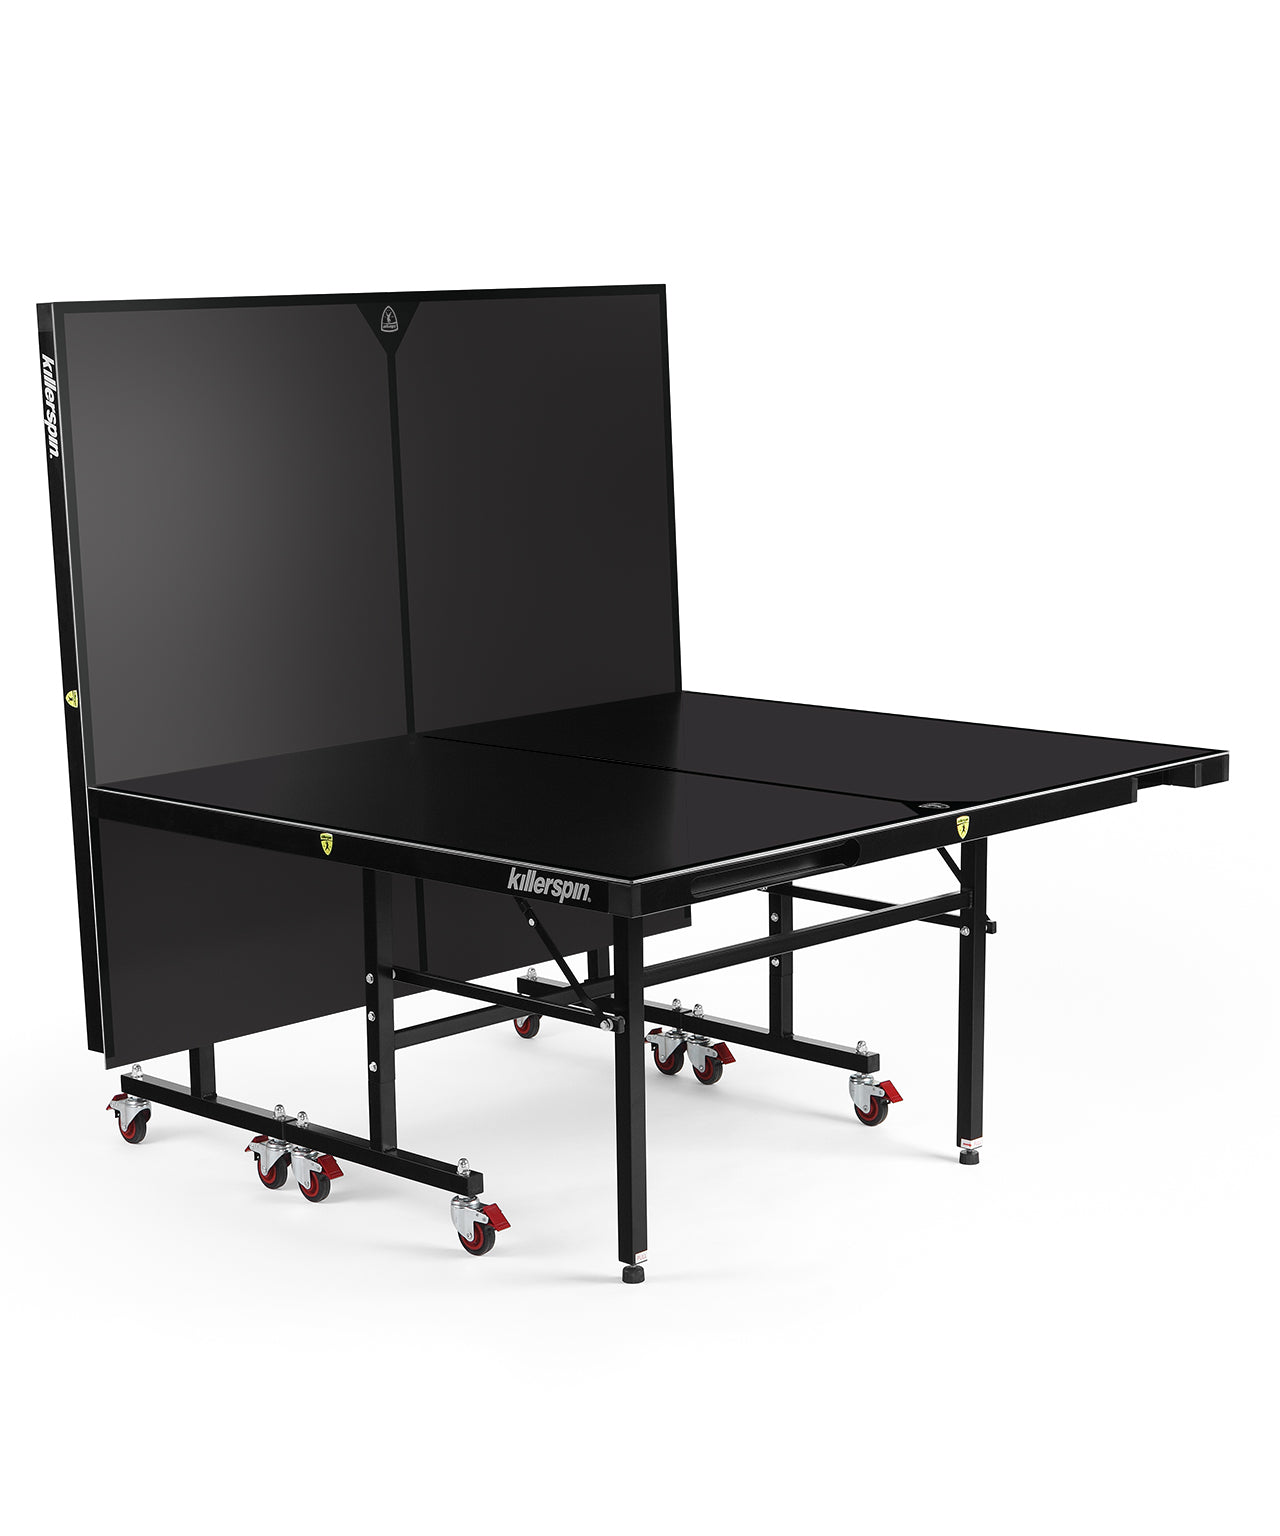 MyT7 BlackStorm Outdoor Ping Pong Table | Killerspin Table Tennis